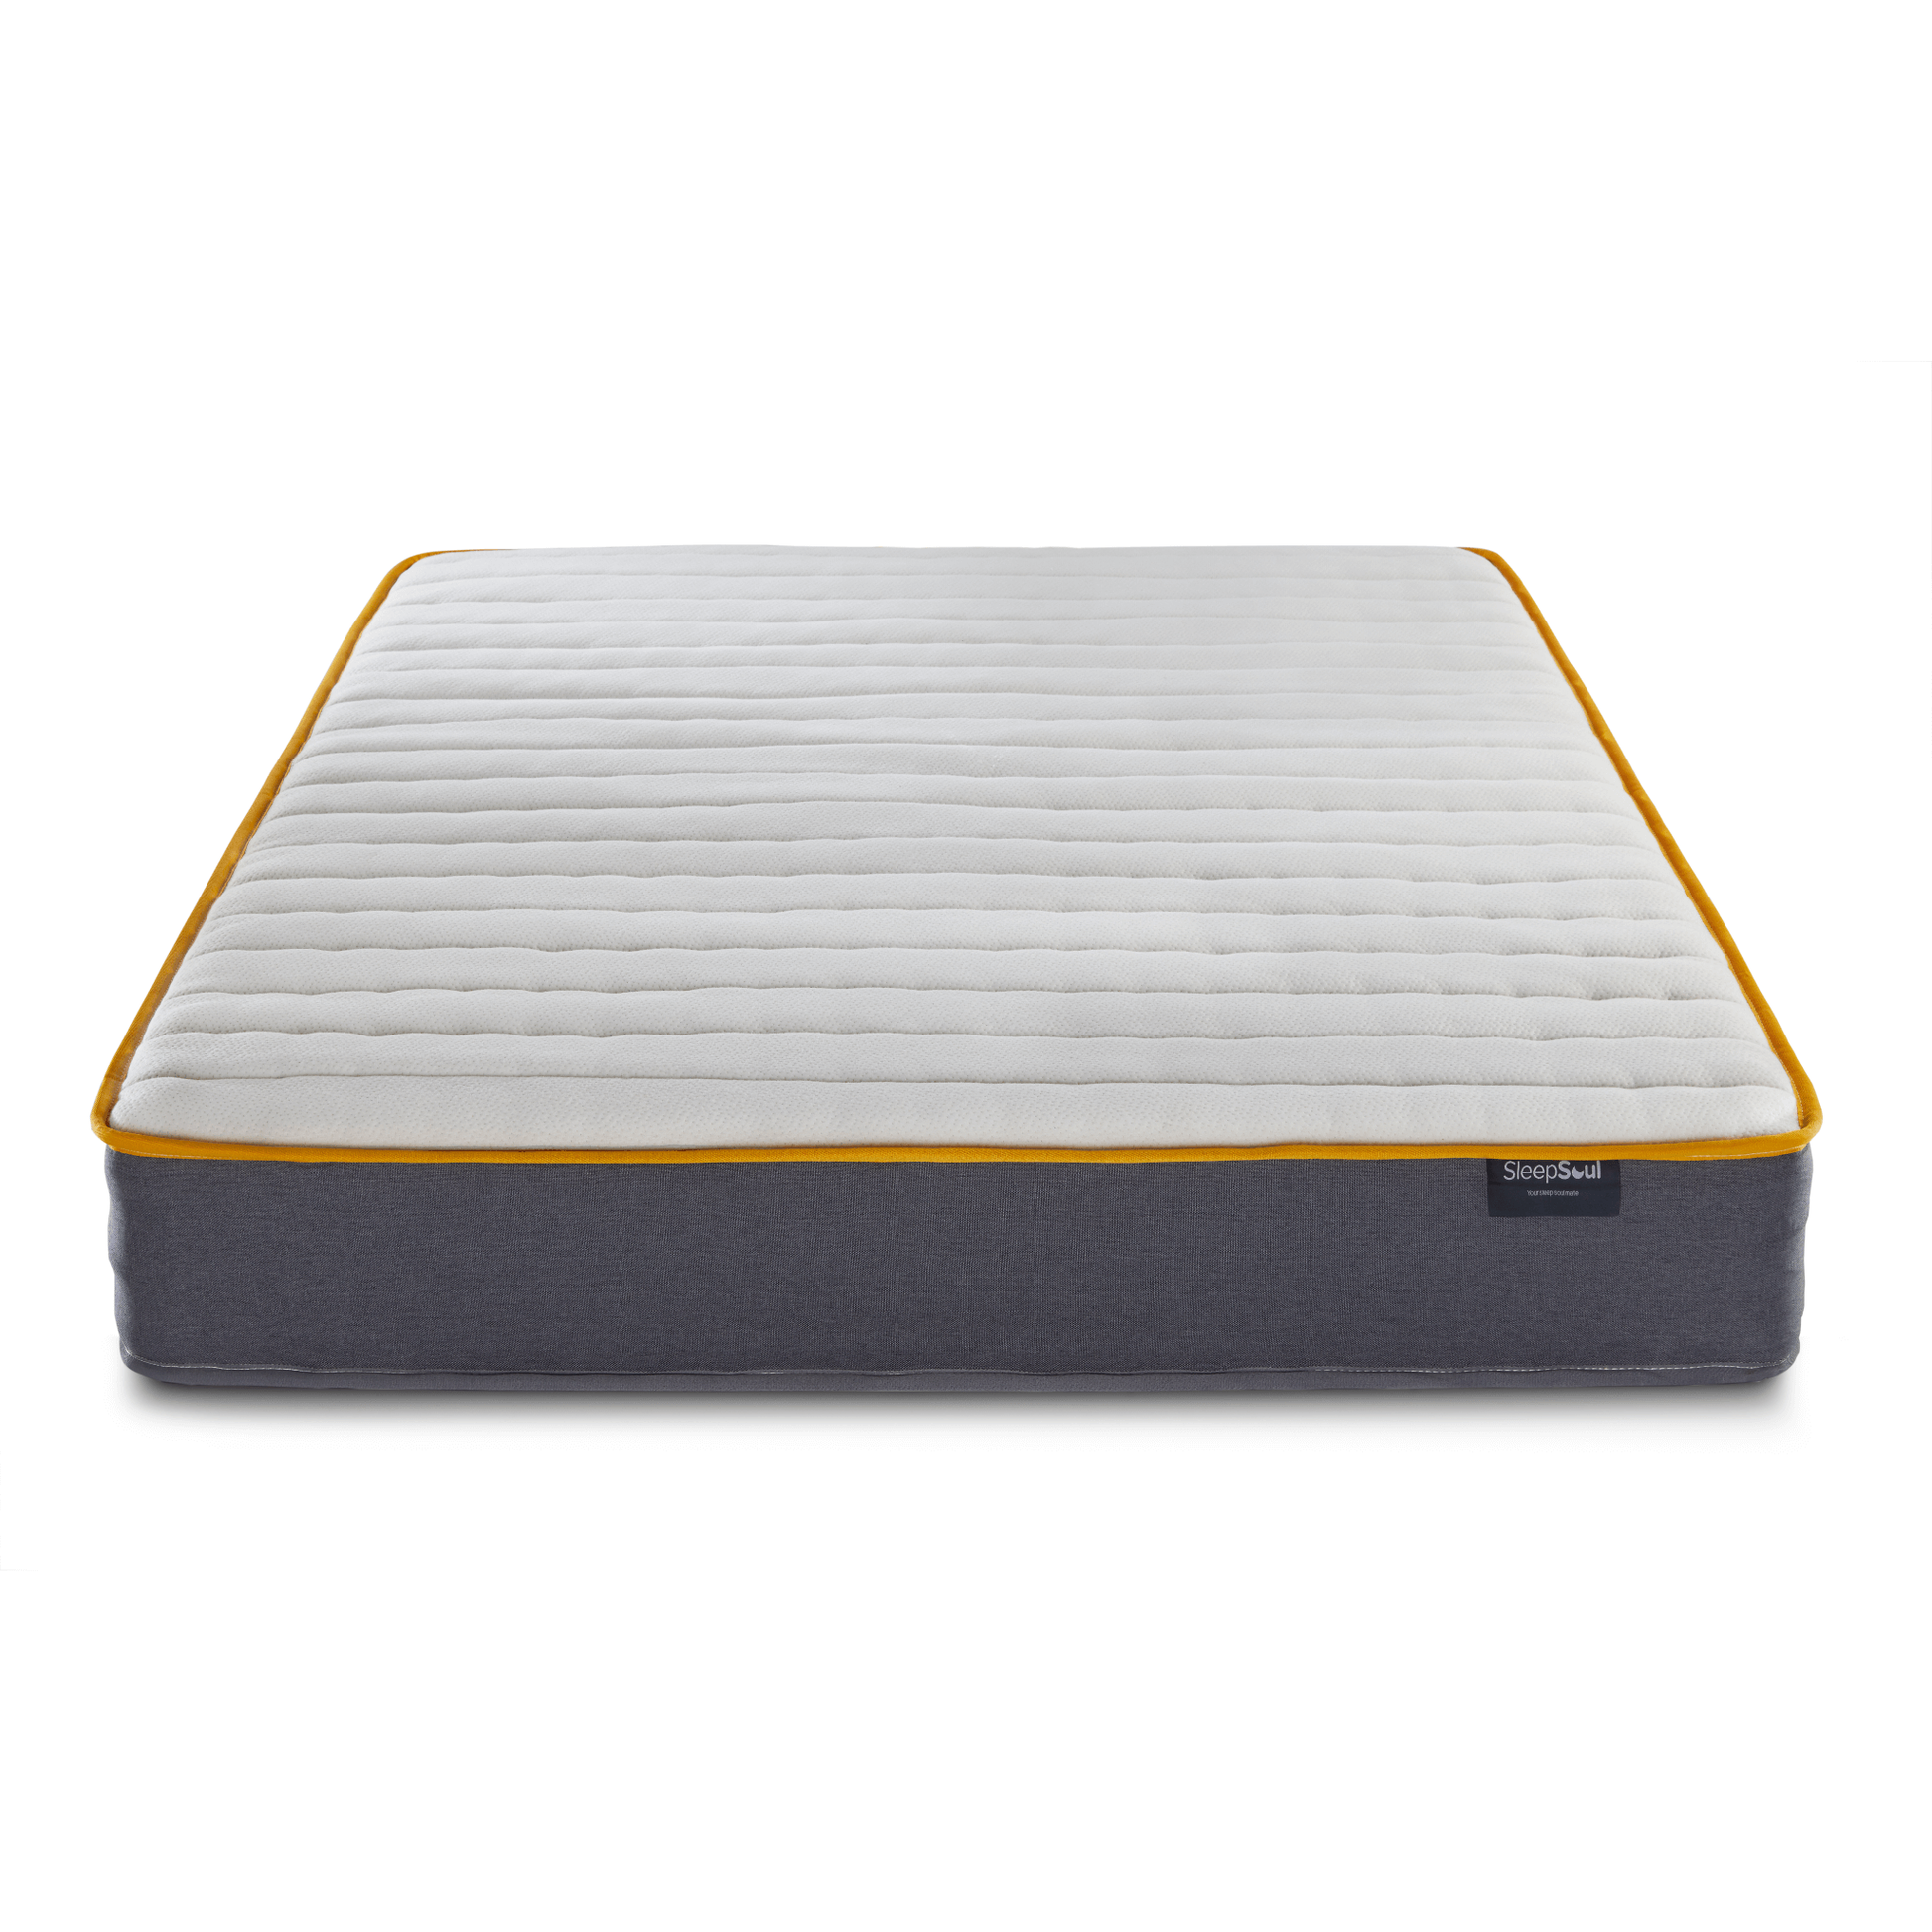 SleepSoul comfort 800 pocket spring standard single mattress full